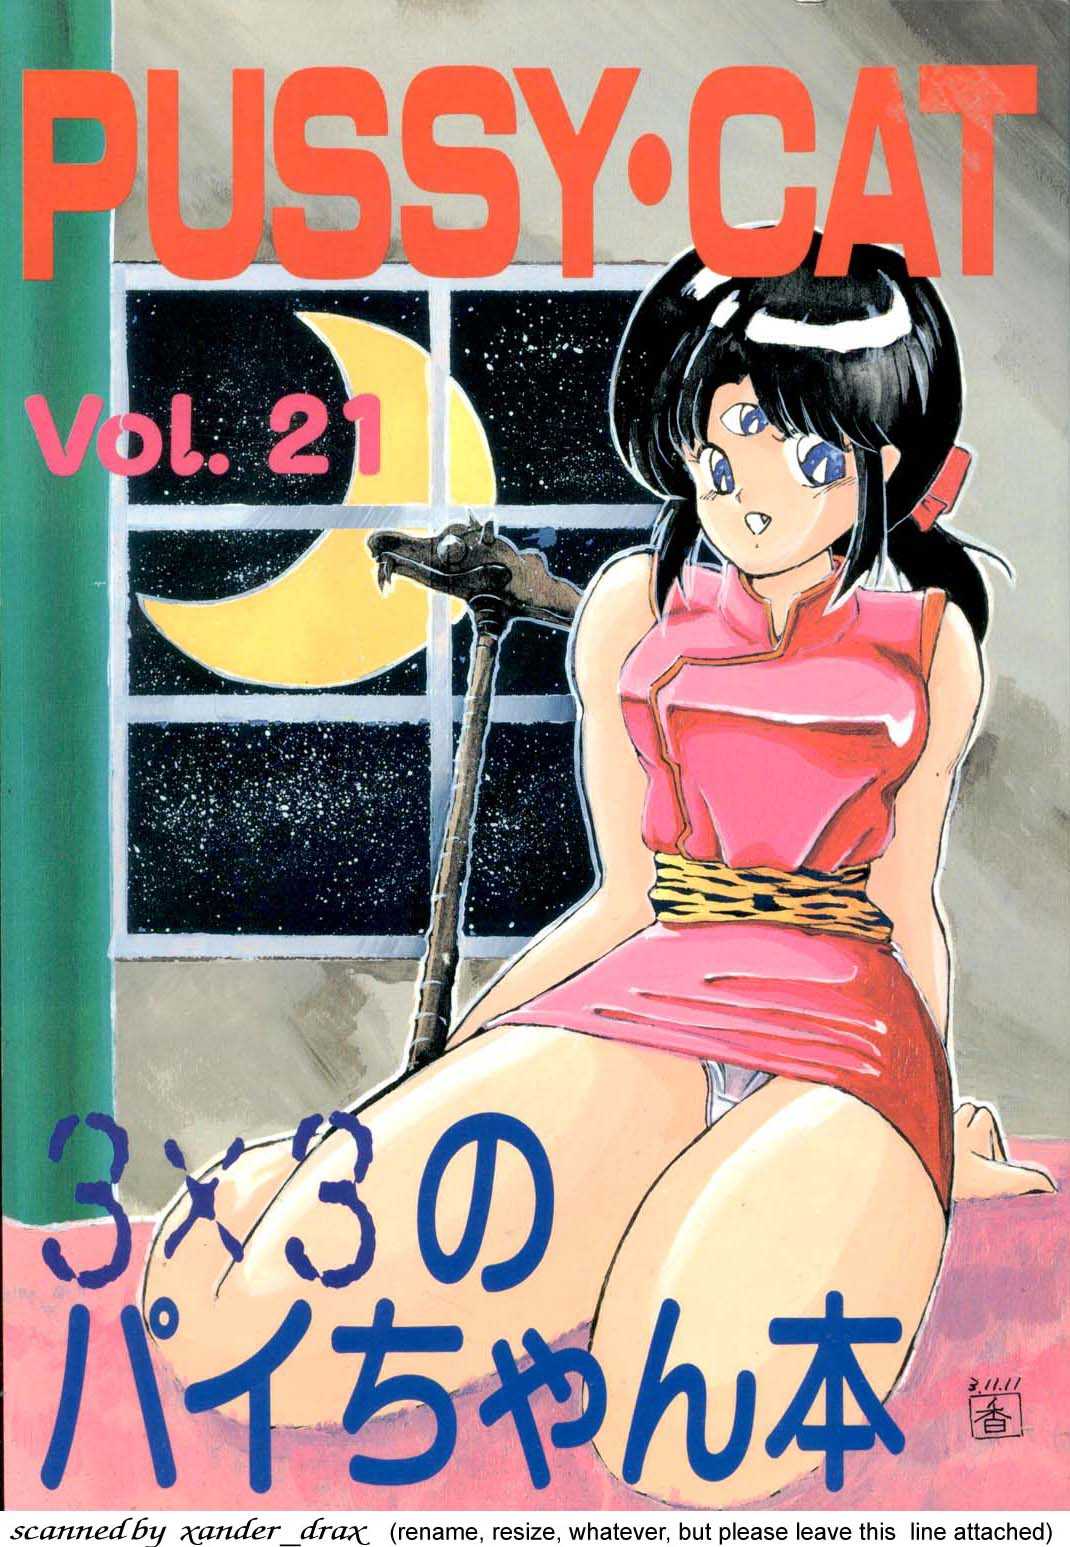 Pussycat Vol 21 (3x3 Eyes) 